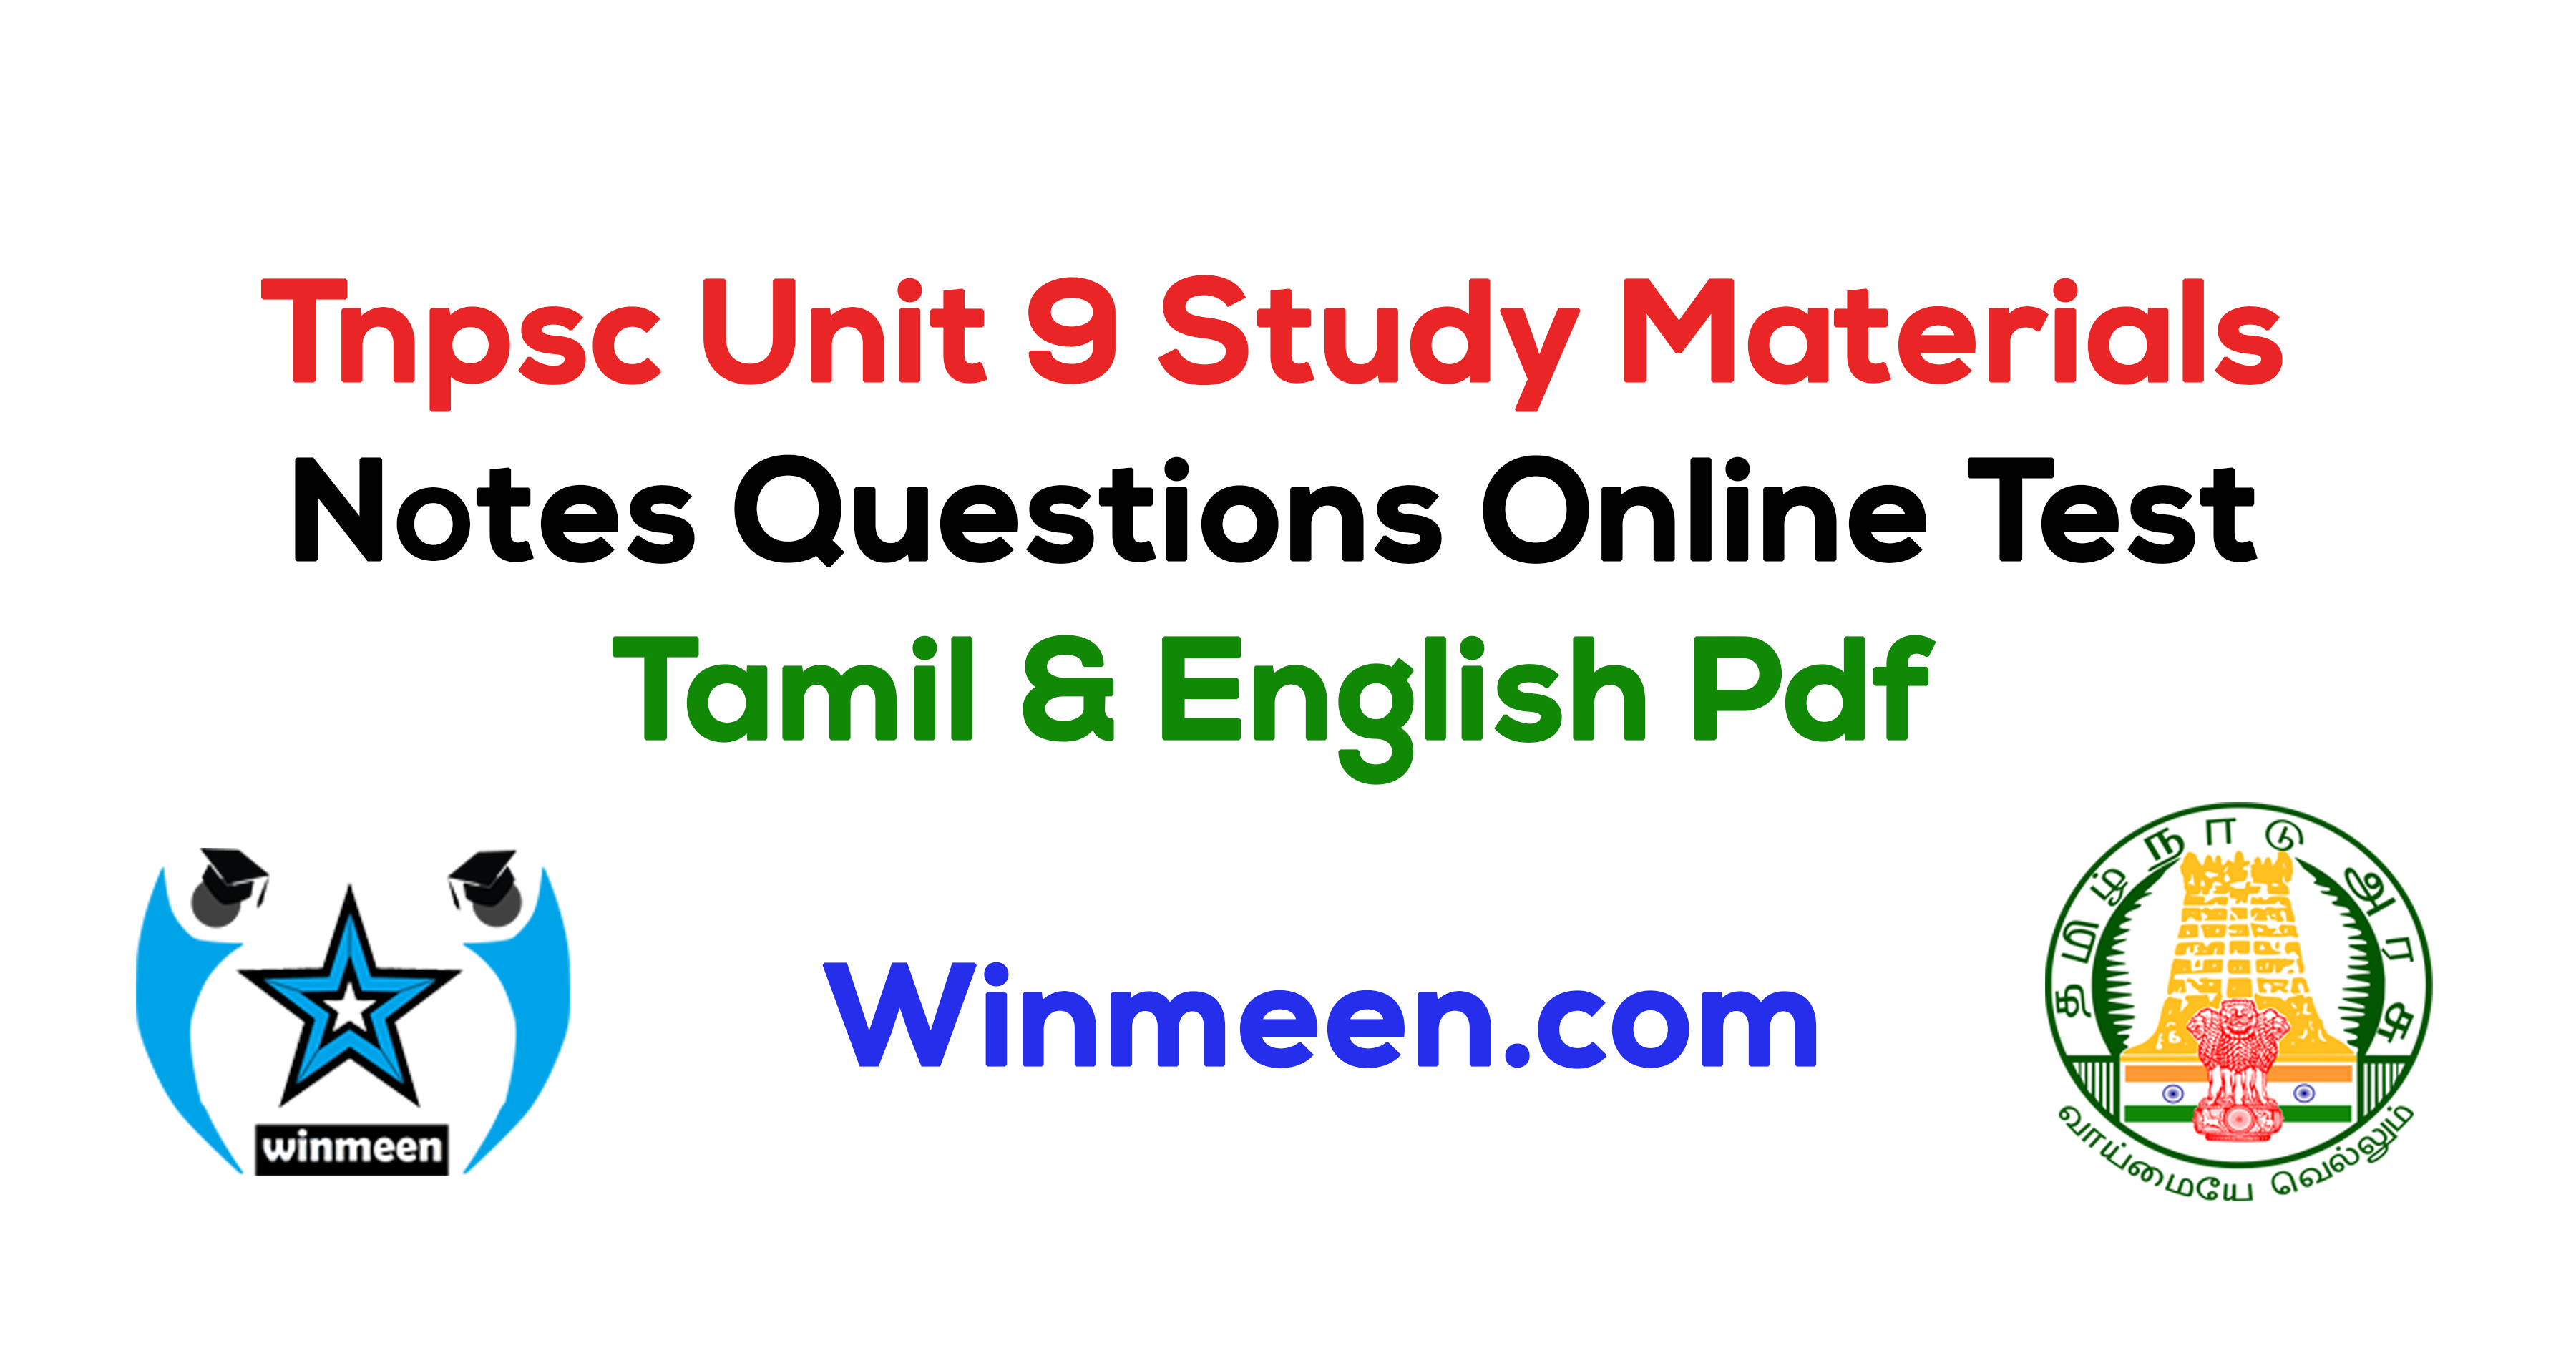 tnpsc-unit-9-study-materials-notes-questions-online-test-tamil-english-pdf-winmeen